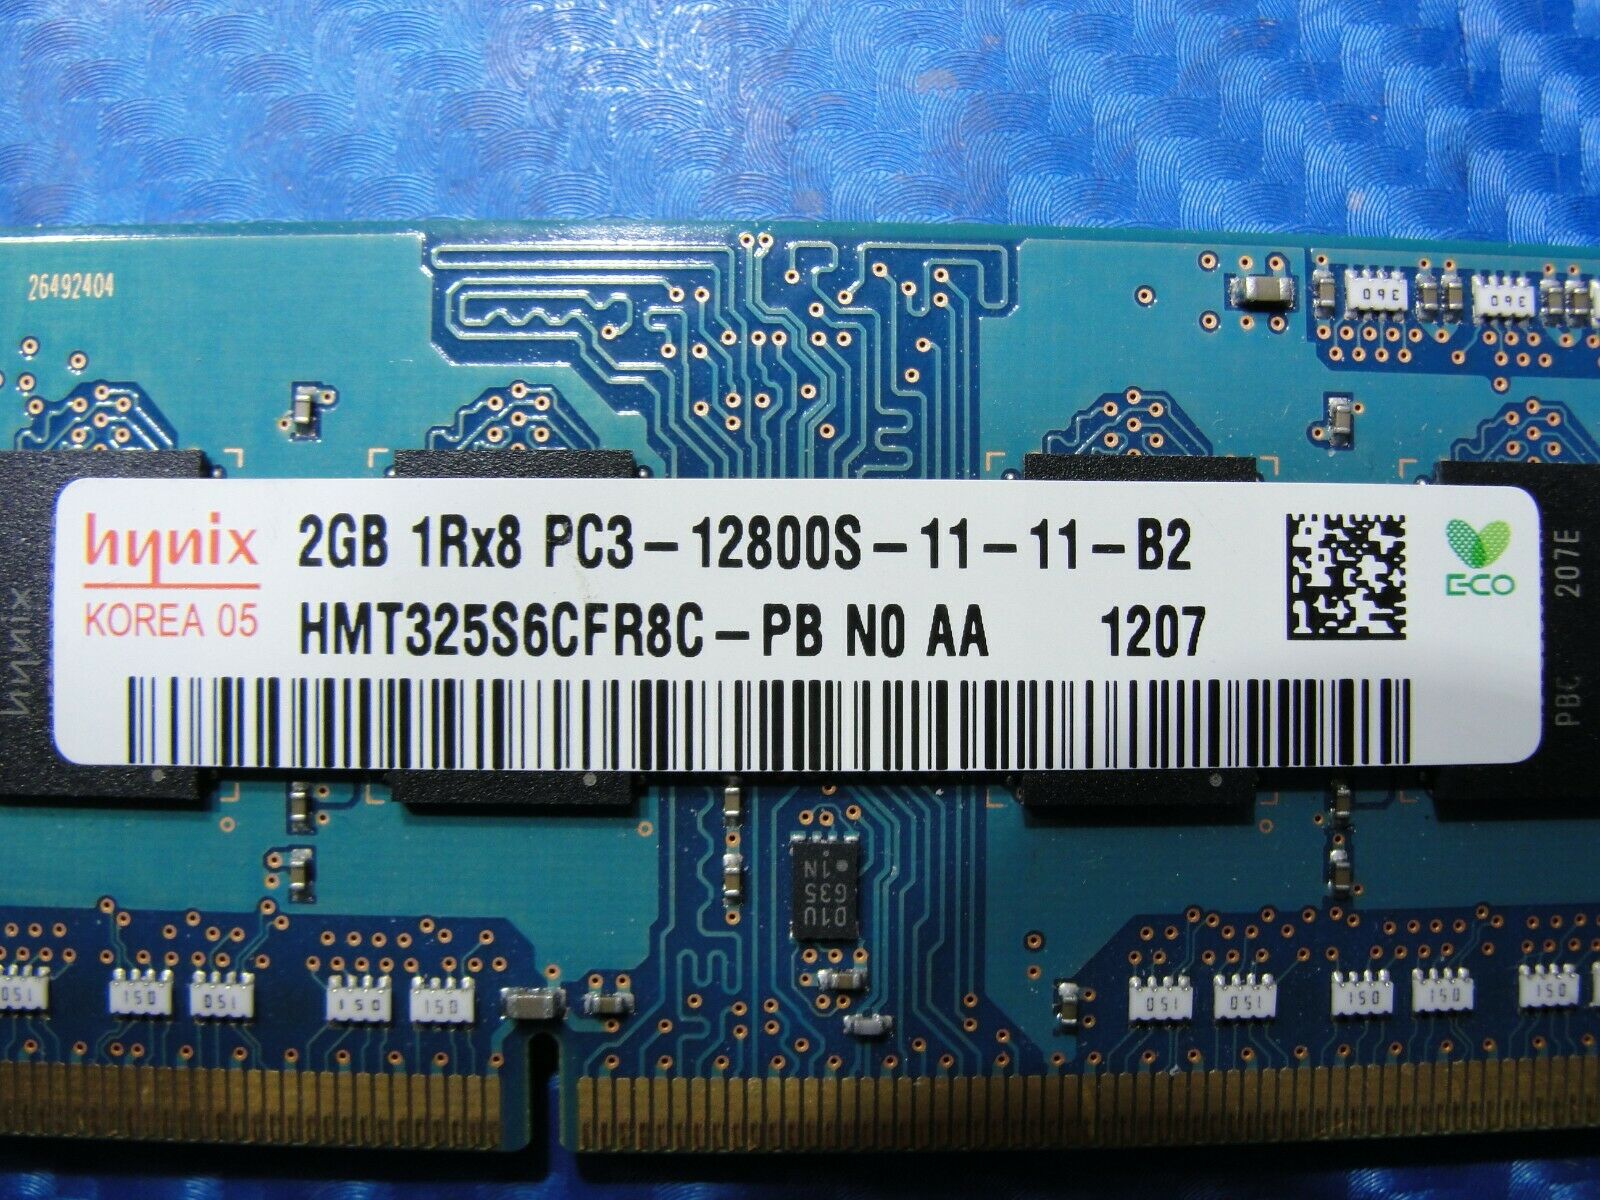 Apple A1297 Hynix 2GB 1Rx8 PC3-12800S SO-DIMM Memory RAM HMT325S6CFR8C-PB #1 Hynix